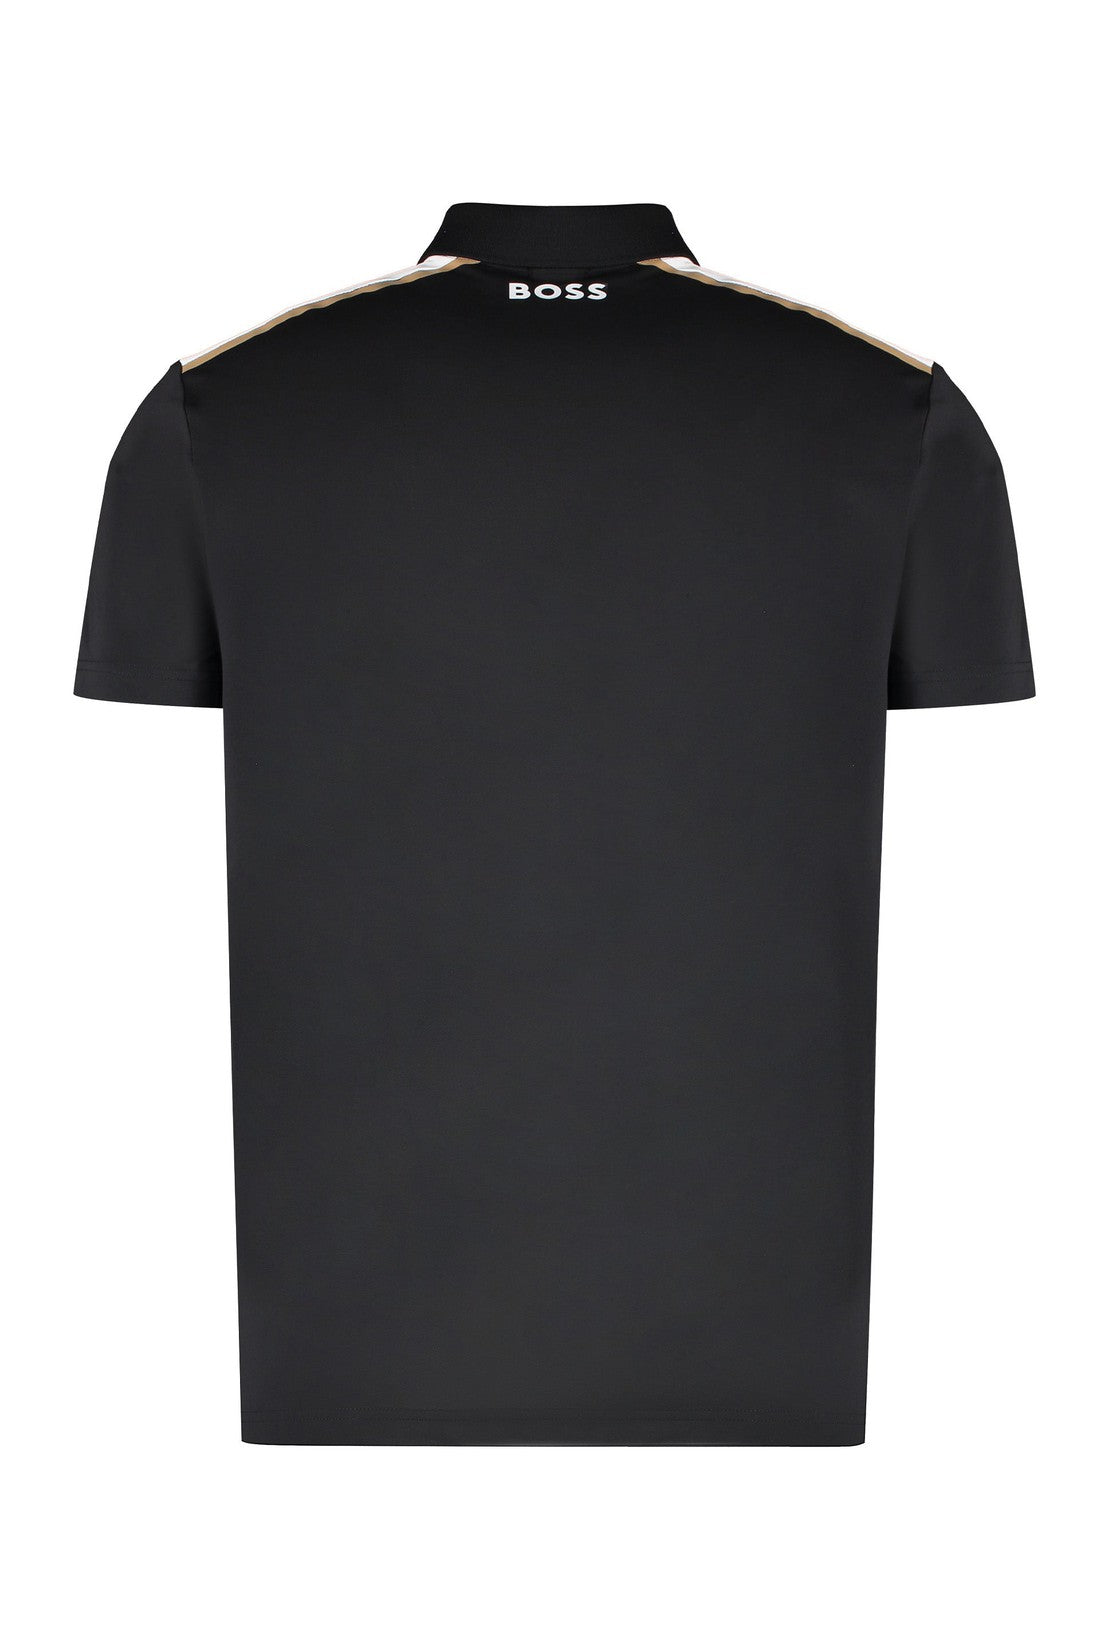 BOSS-OUTLET-SALE-Techno jersey polo shirt-ARCHIVIST